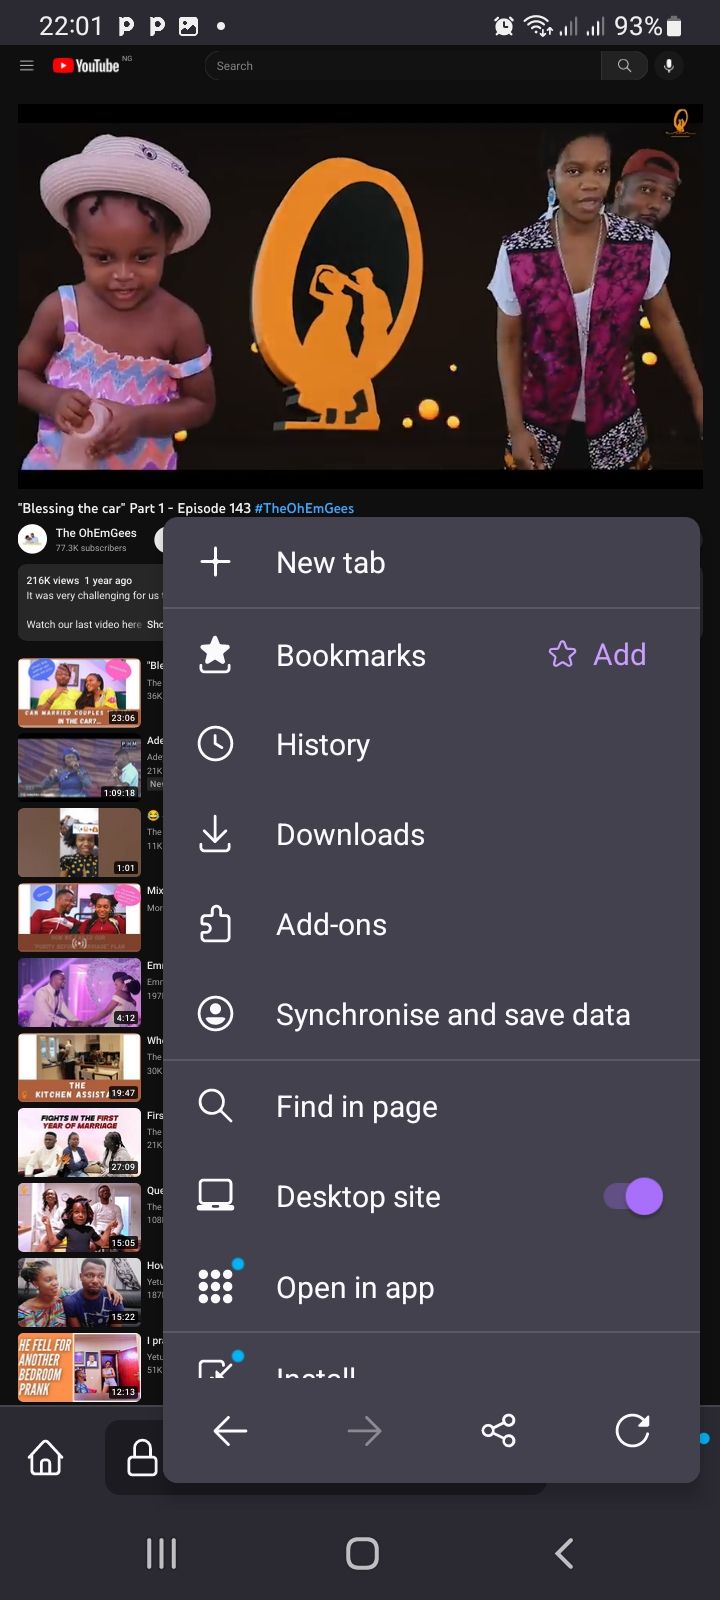 YouTube web app desktop site option